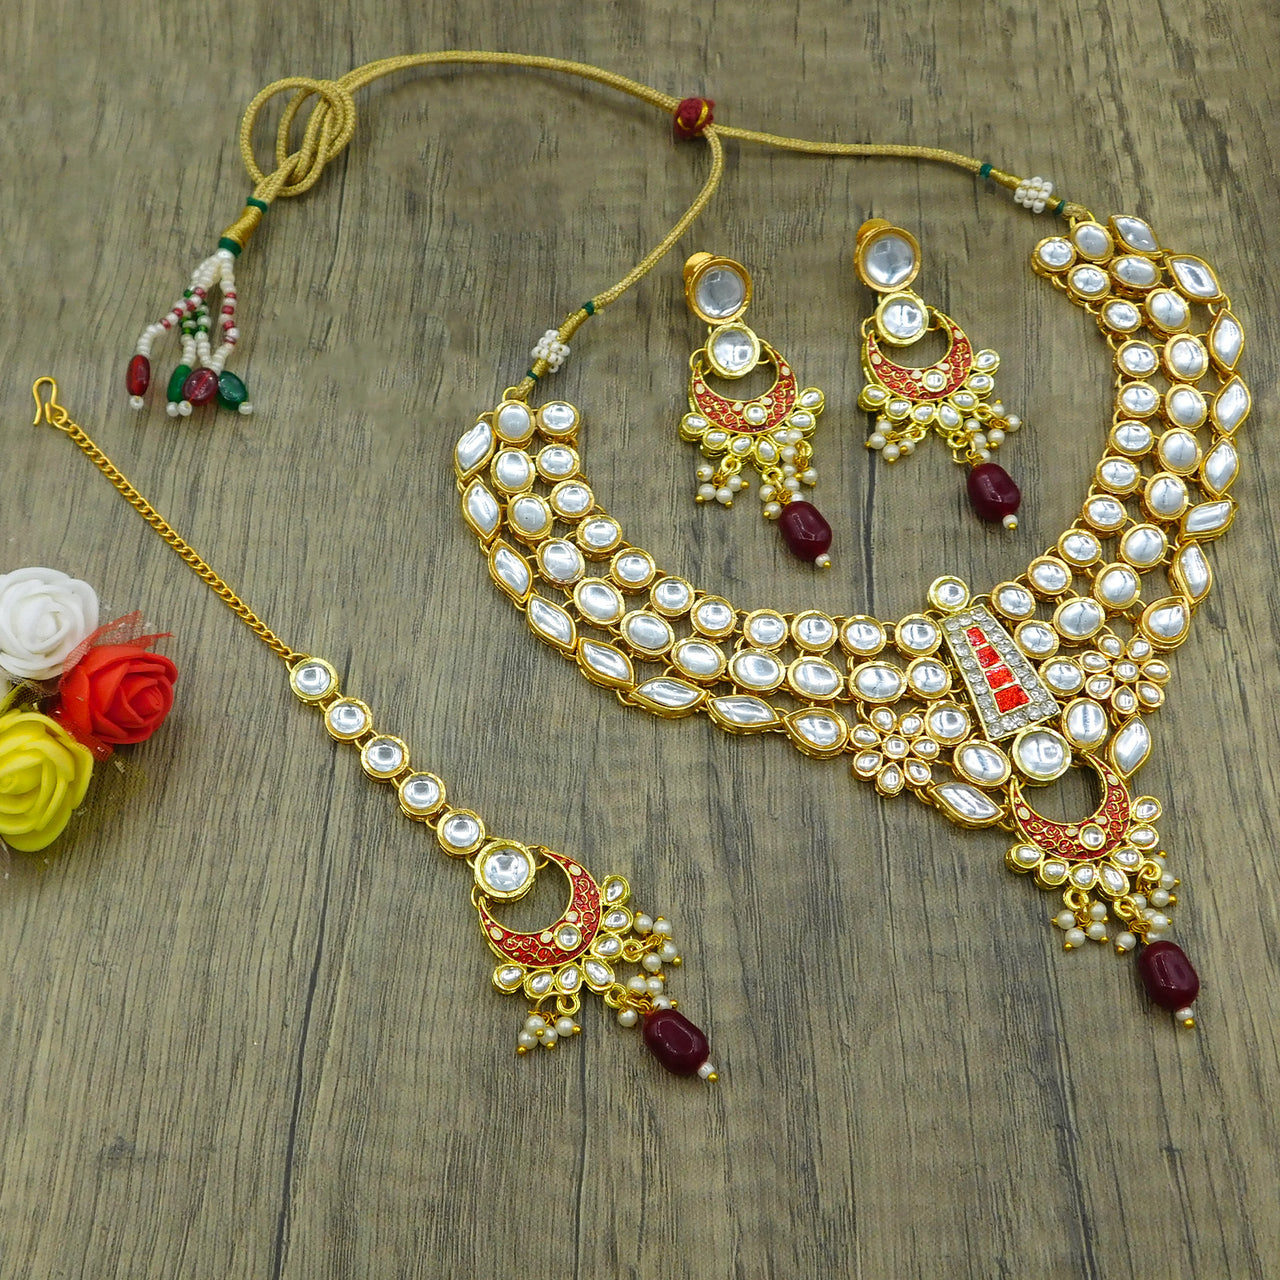 Sujwel Gold Kundan Mina Jewellery Set (08-0483)